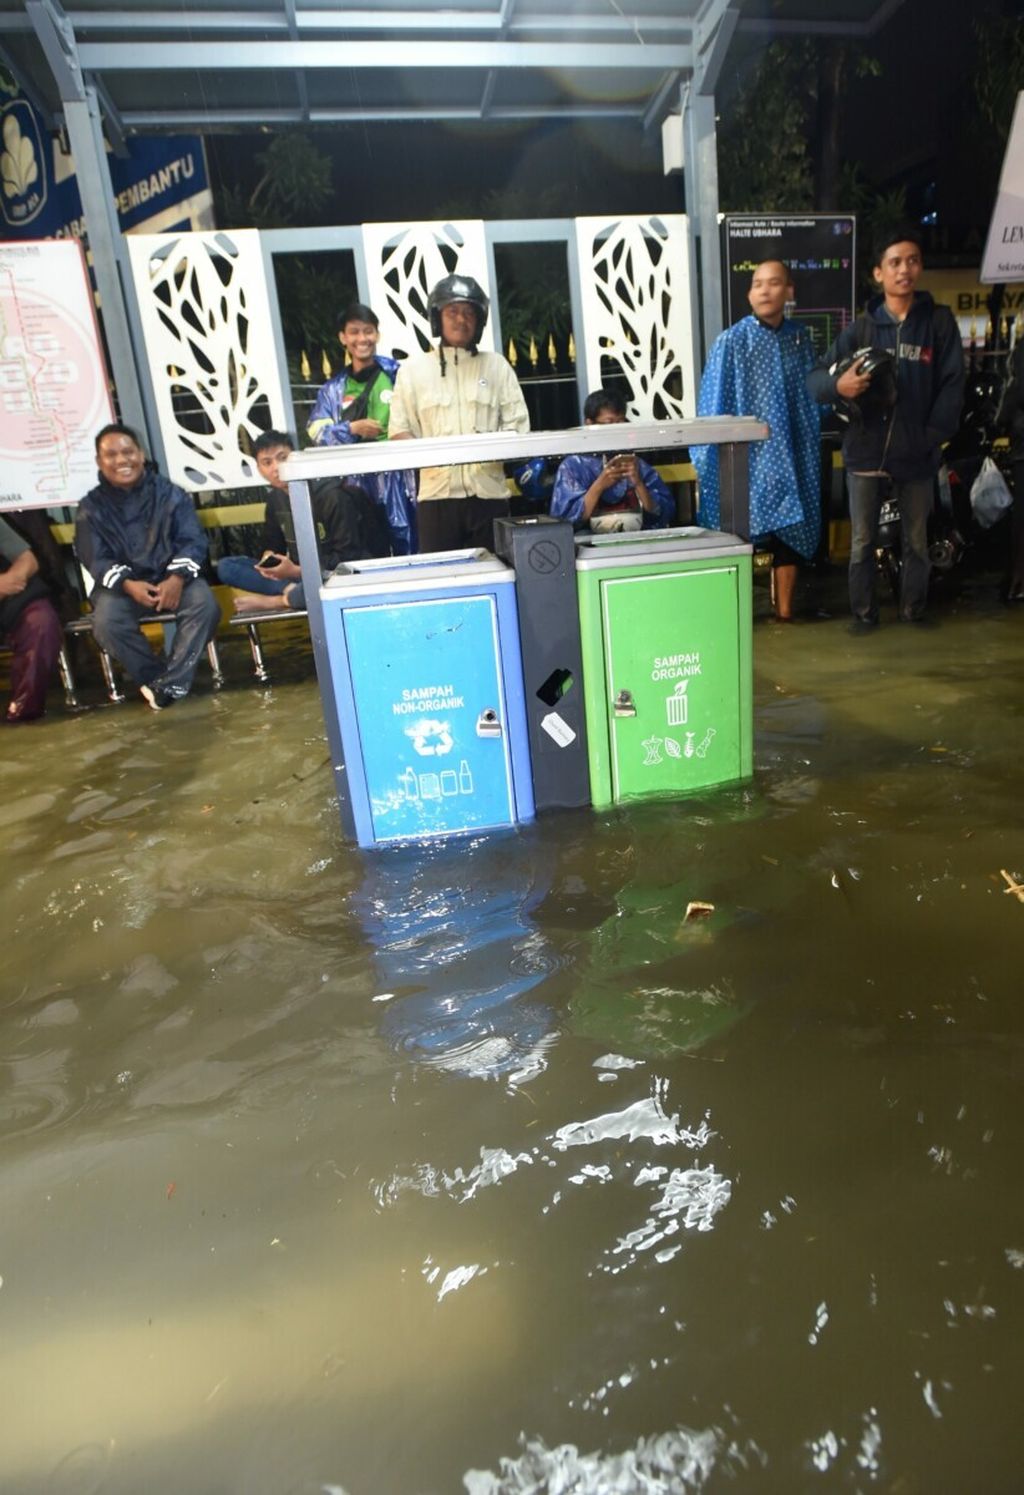 Pengendara yang menghindari banjir yang menggenangi Jalan Ahmad Yani menunggu banjir surut di halte bus, Surabaya, Jumat (31/1/2020). Hujan deras yang mengguyur dari pukul 15.30 hingga 19.00 di hampir seluruh wilayah Surabaya membuat sejumlah ruas utama jalan Kota Surabaya tergenang air dan menyebabkan kemacetan panjang. 